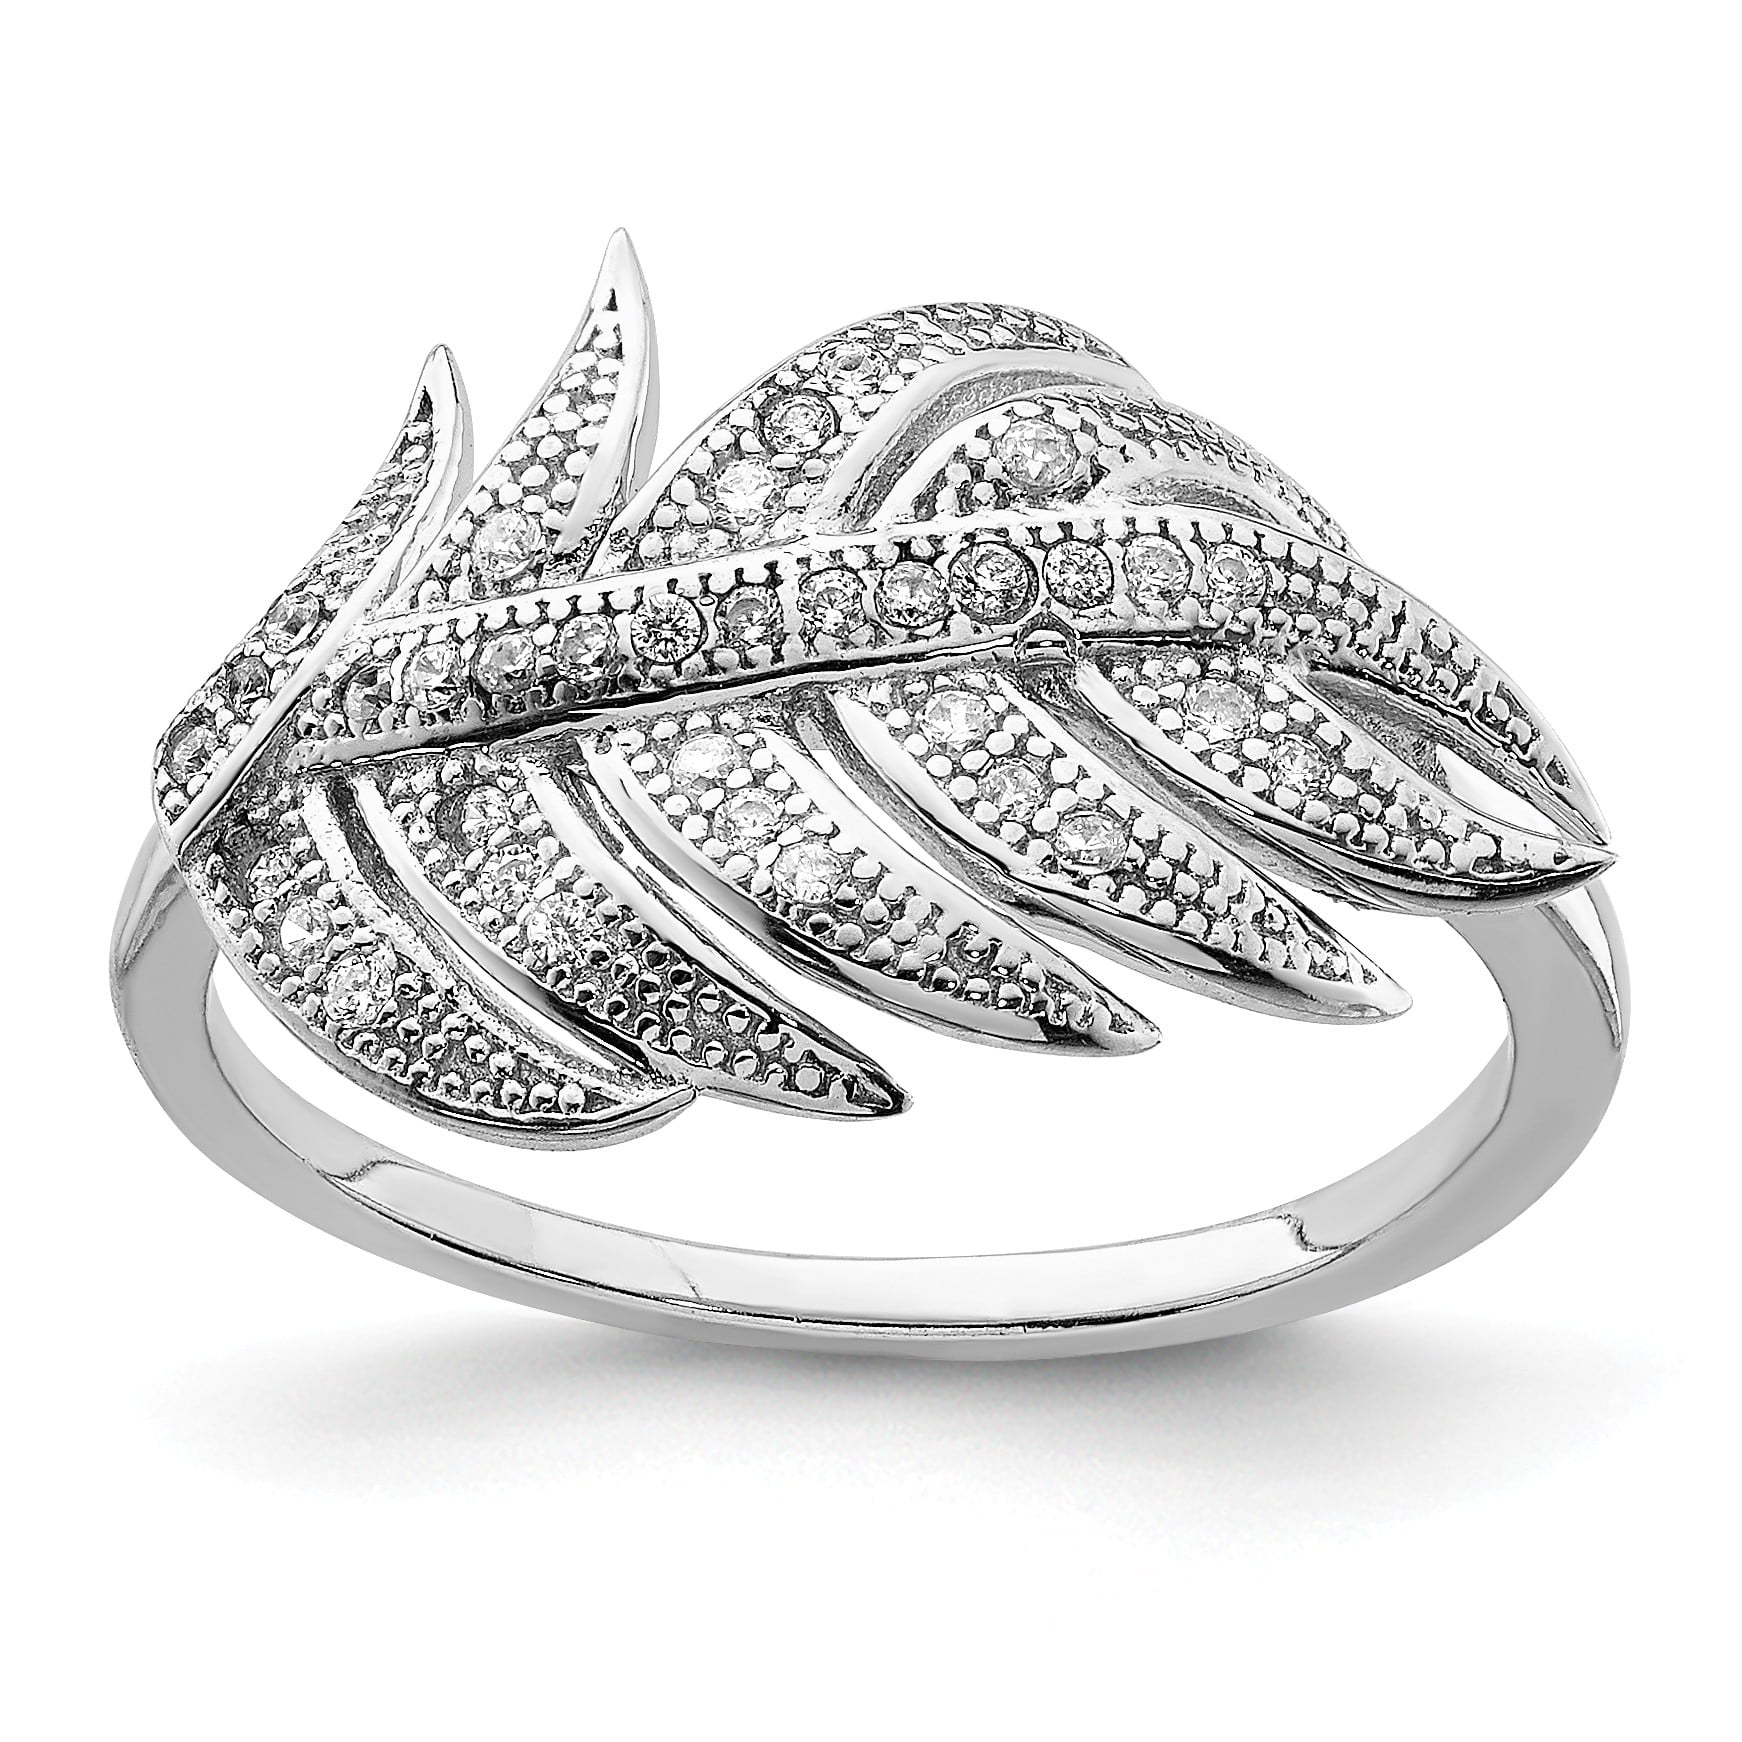 Size 7 Bonyak Jewelry Sterling Silver Polished CZ Ring 